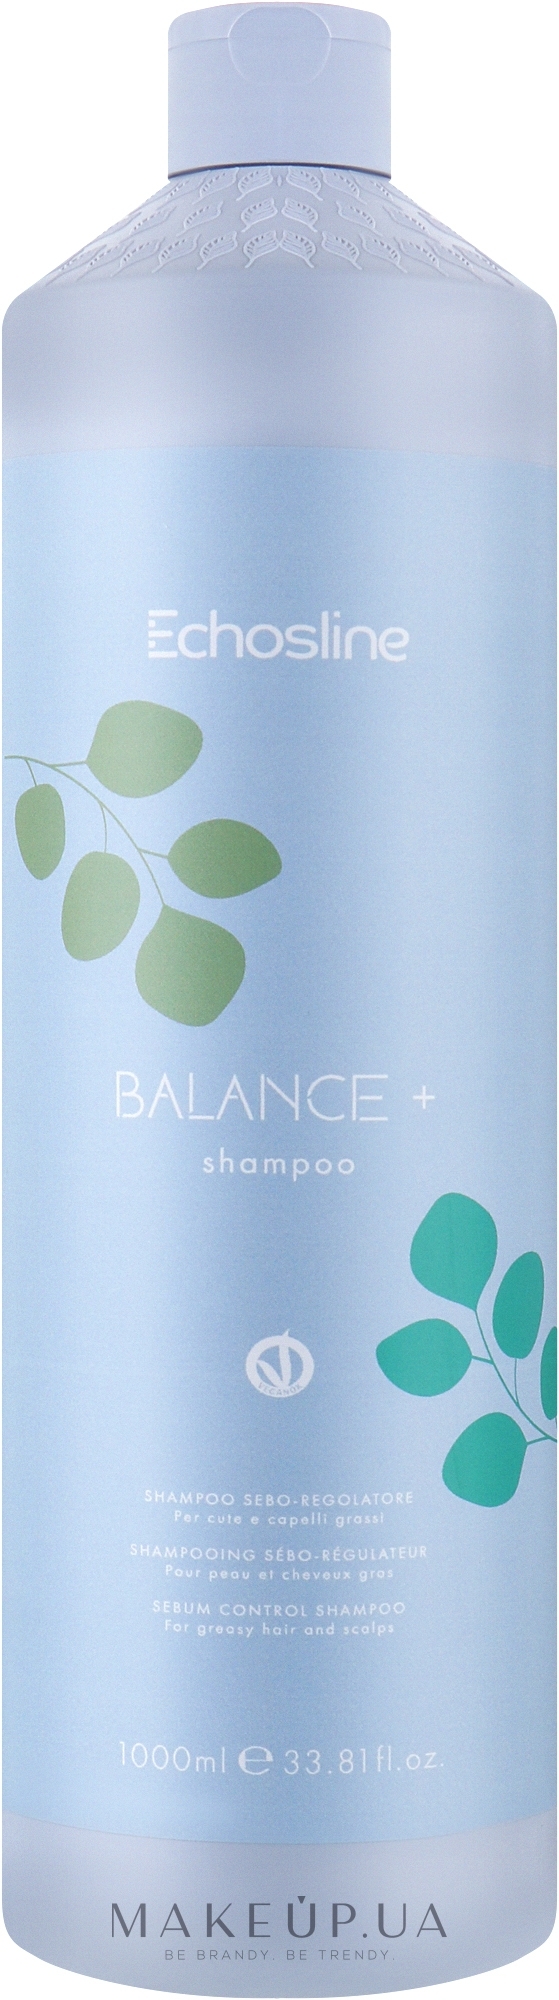 Себорегулирующий шампунь - Echosline Balance Plus Shampoo — фото 1000ml